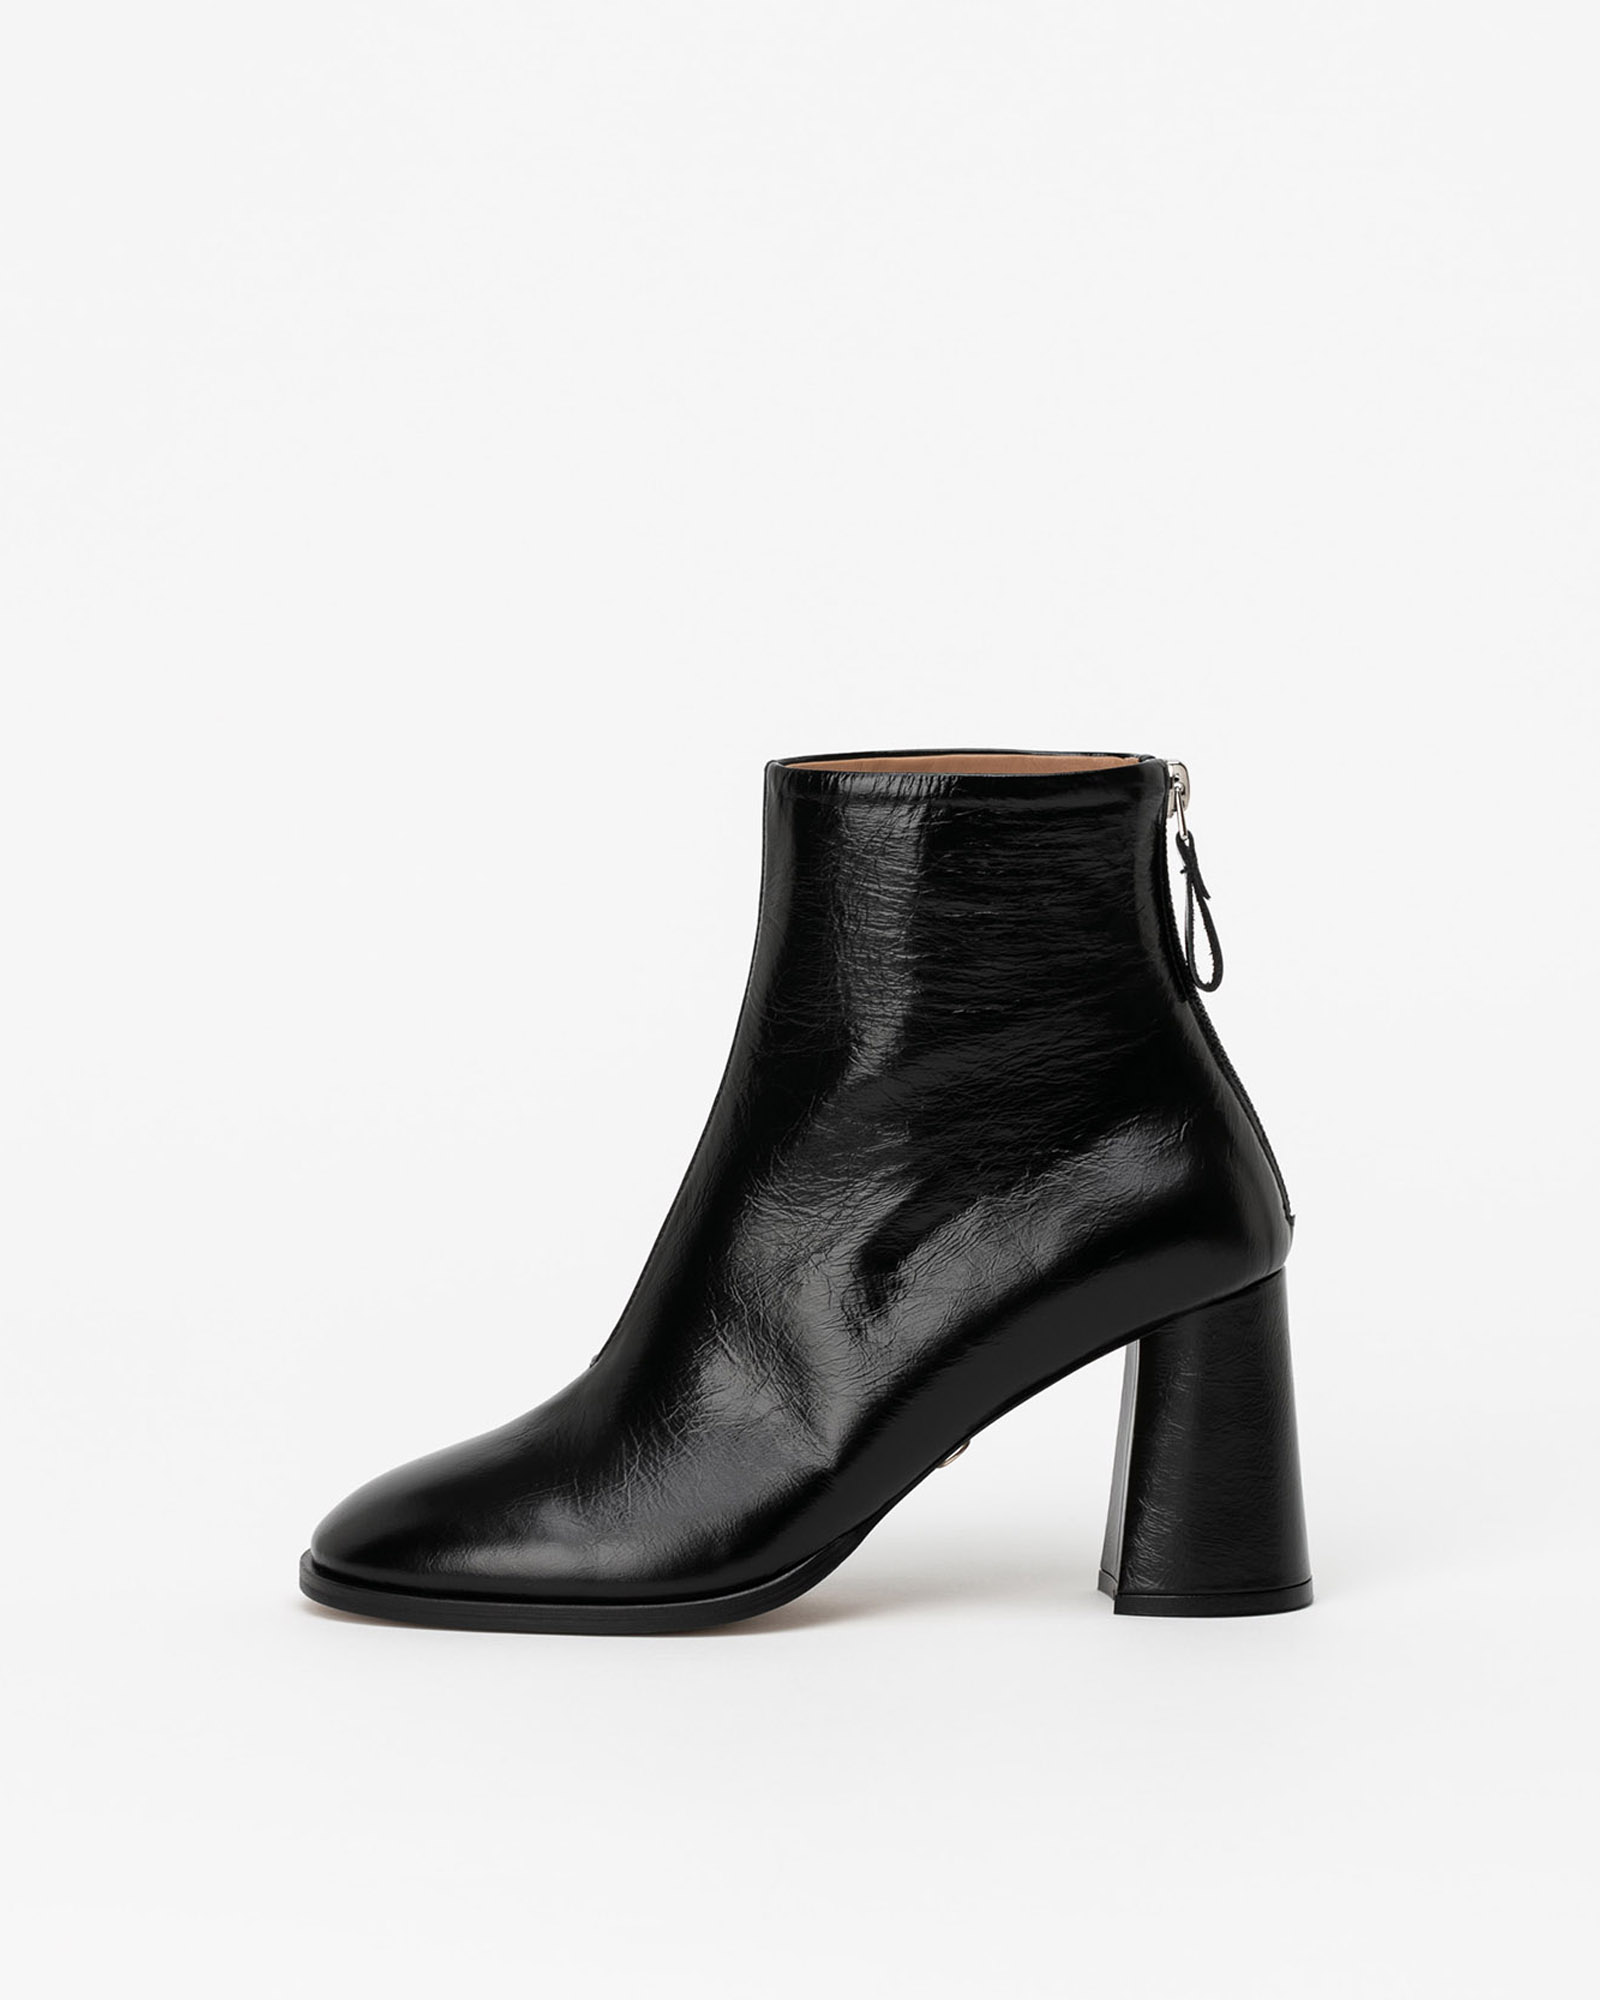 Briol Boots in Wrinkled Black